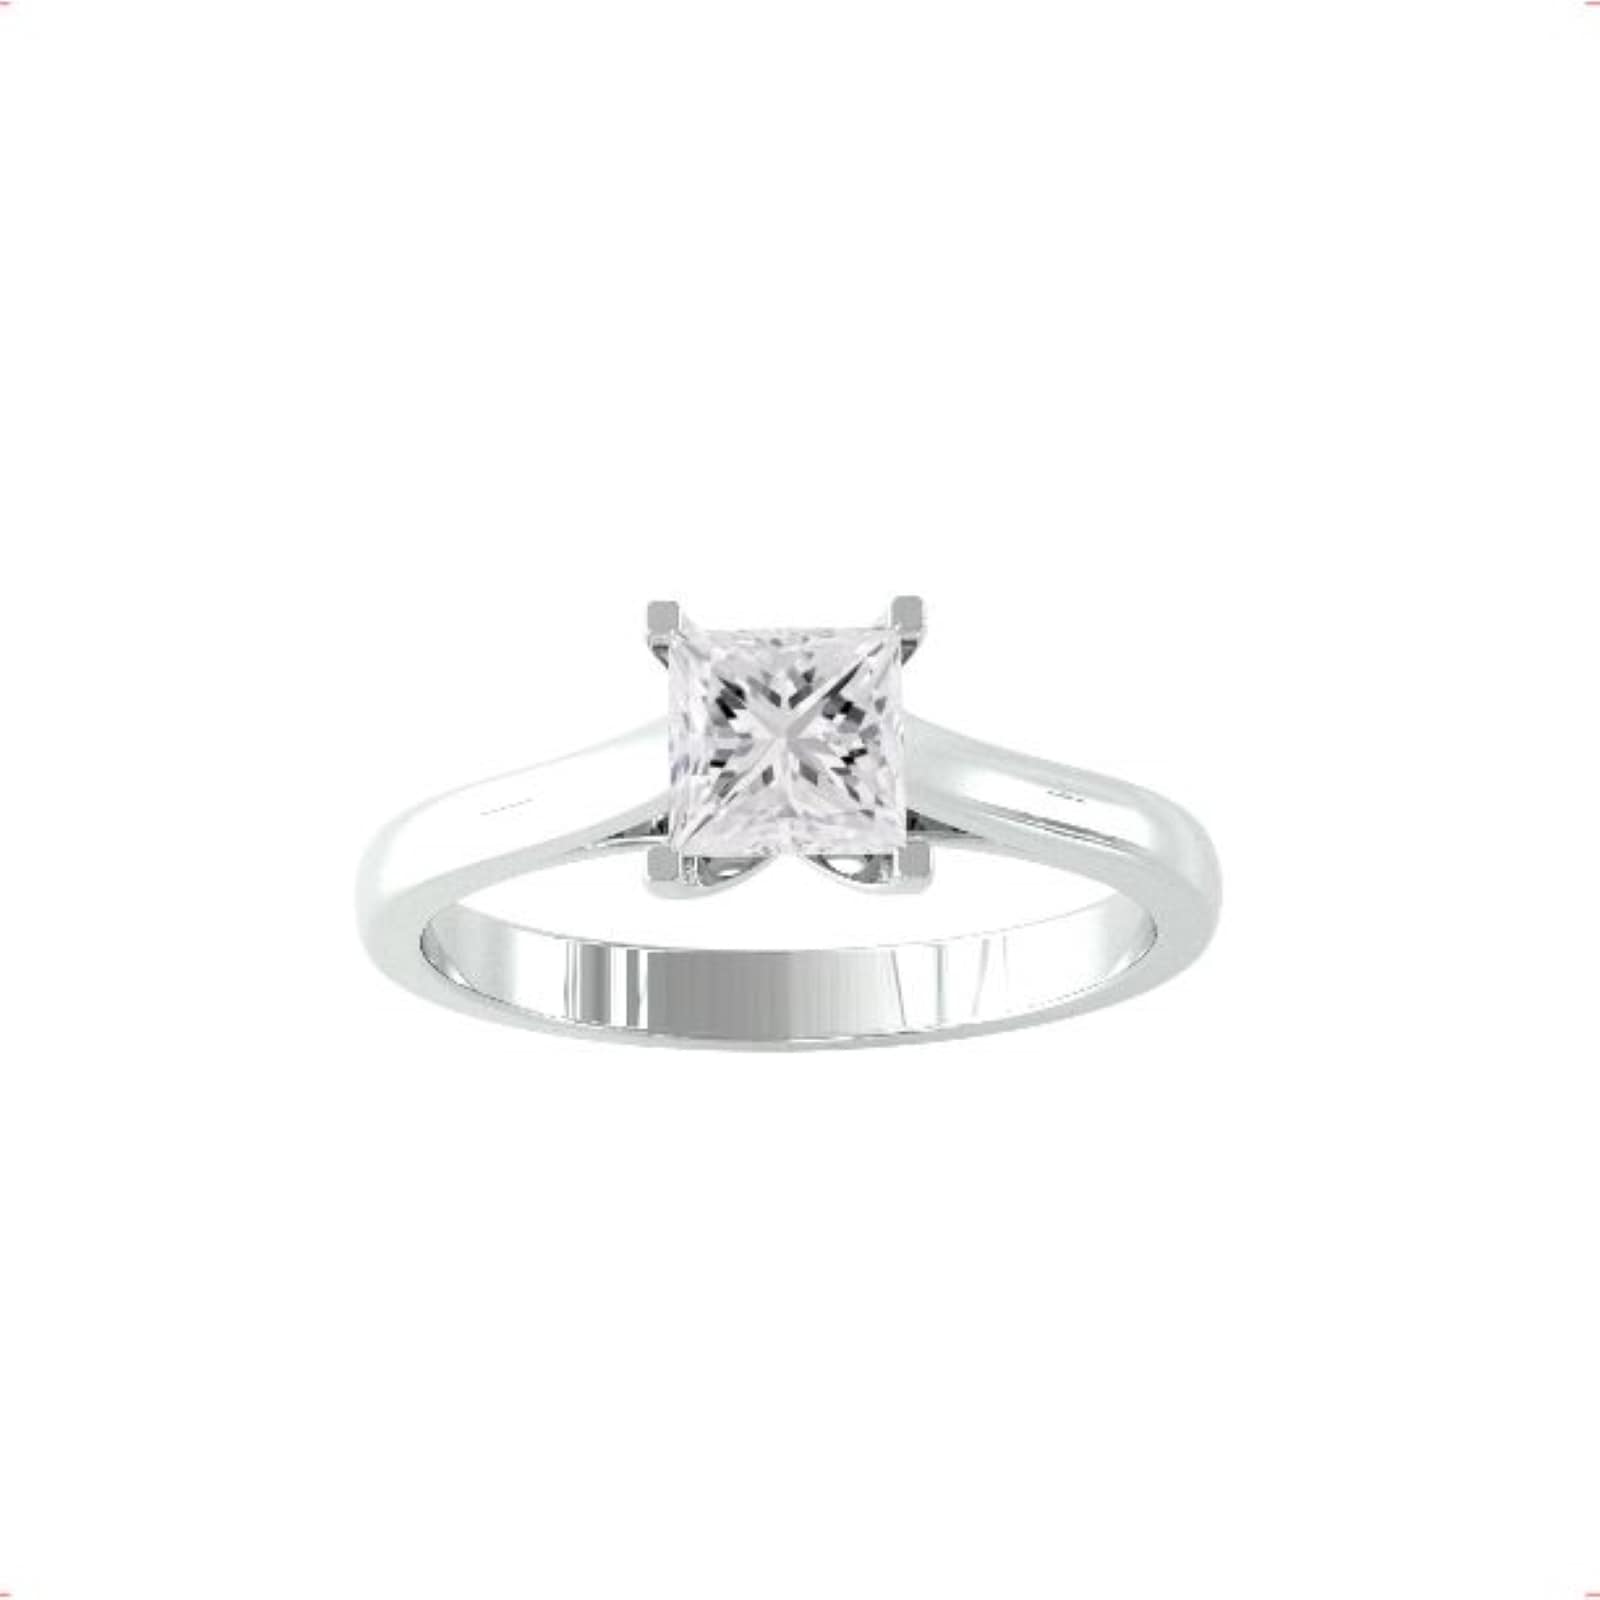 9ct White Gold 0.33cttw Princess Cut Diamond Ring - Ring Size J.5